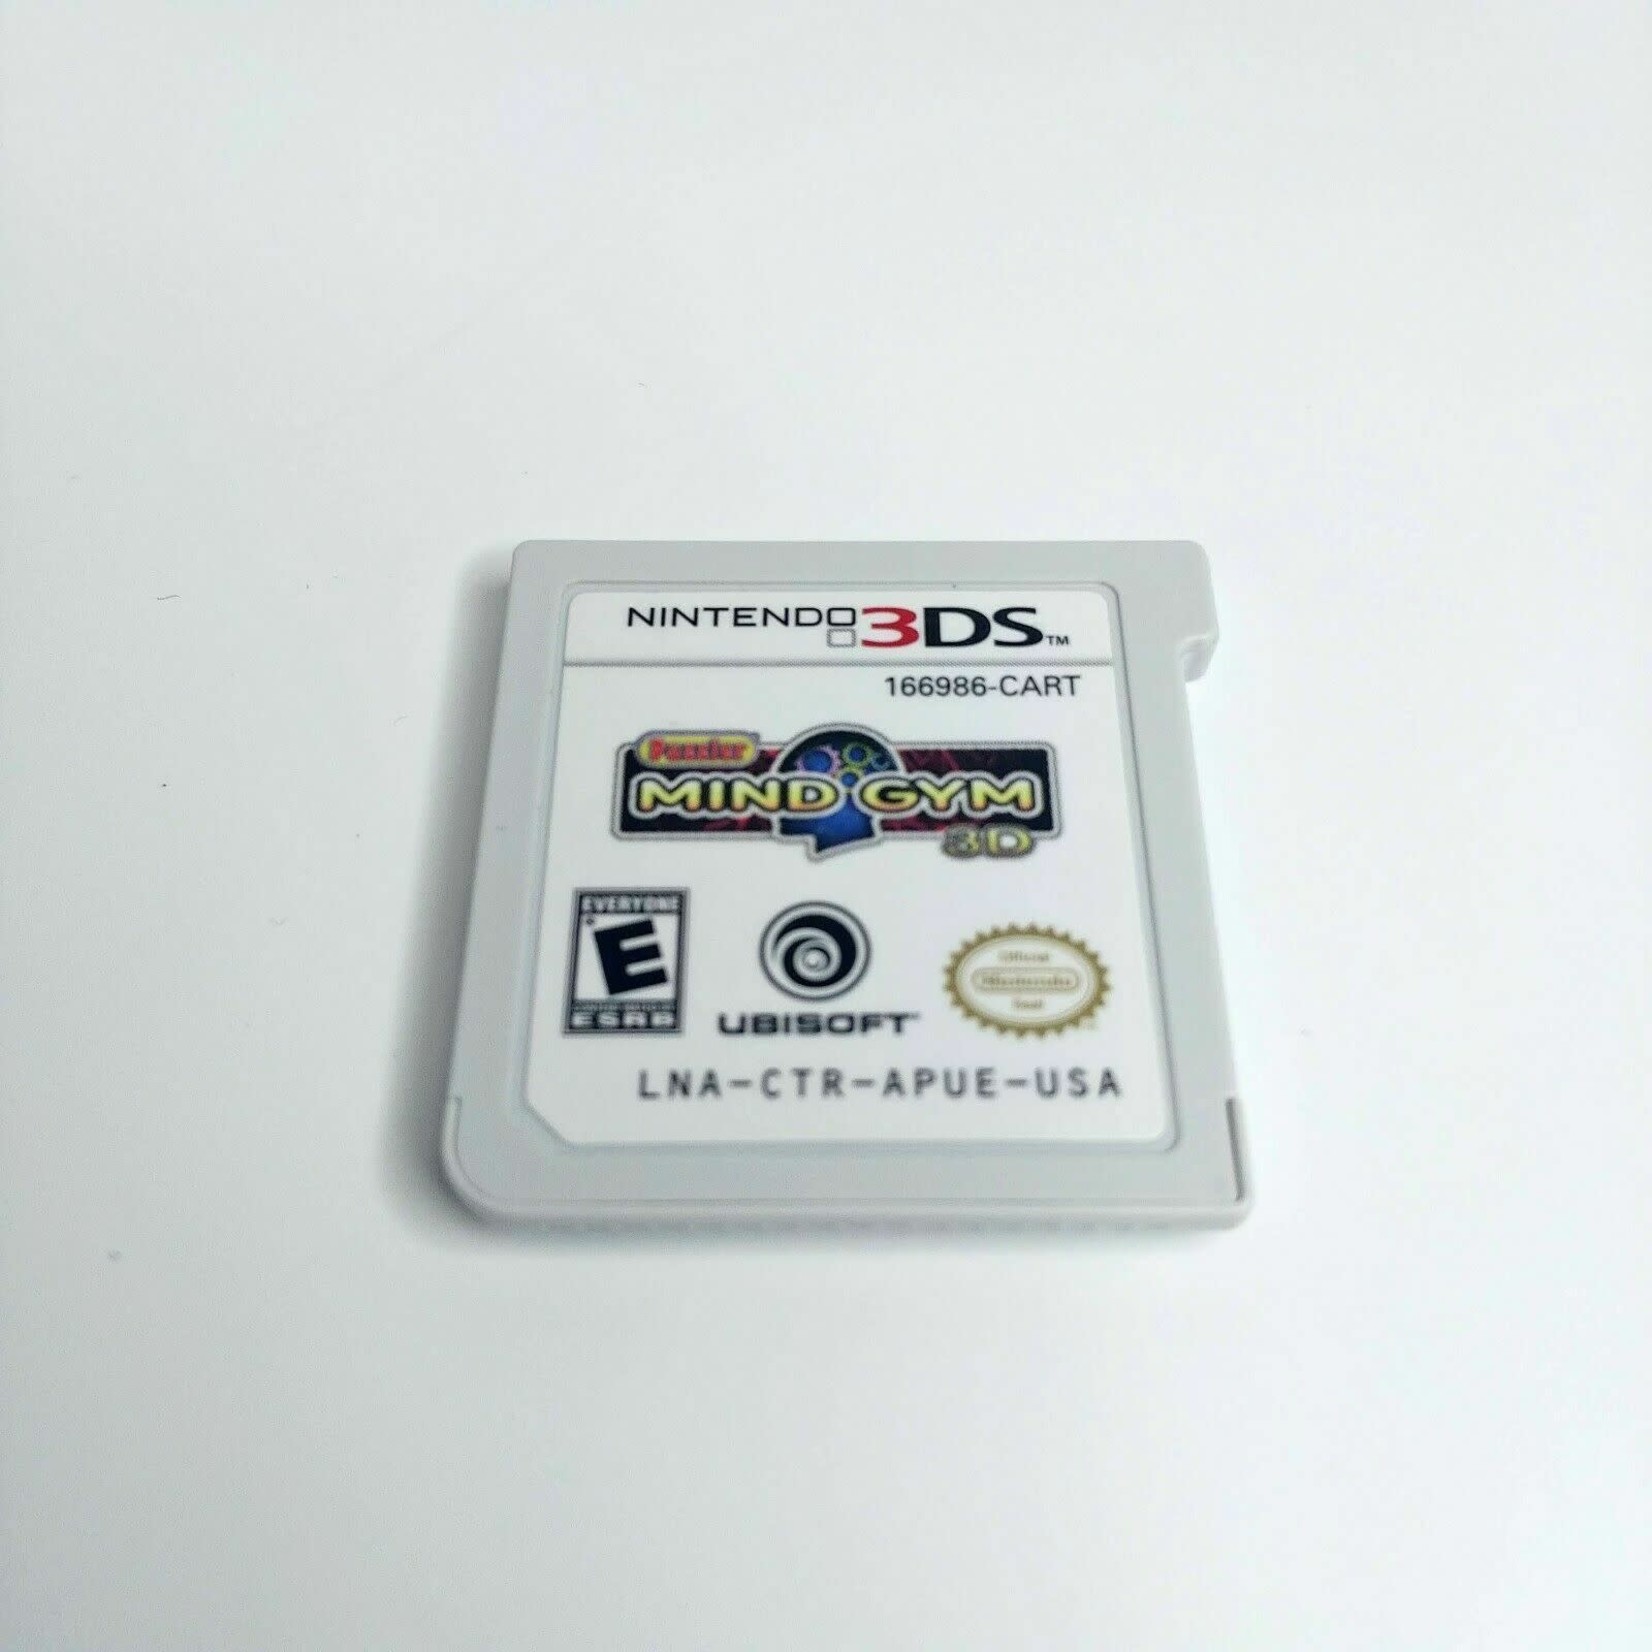 3DSu-Mind Gym 3D (chip only)